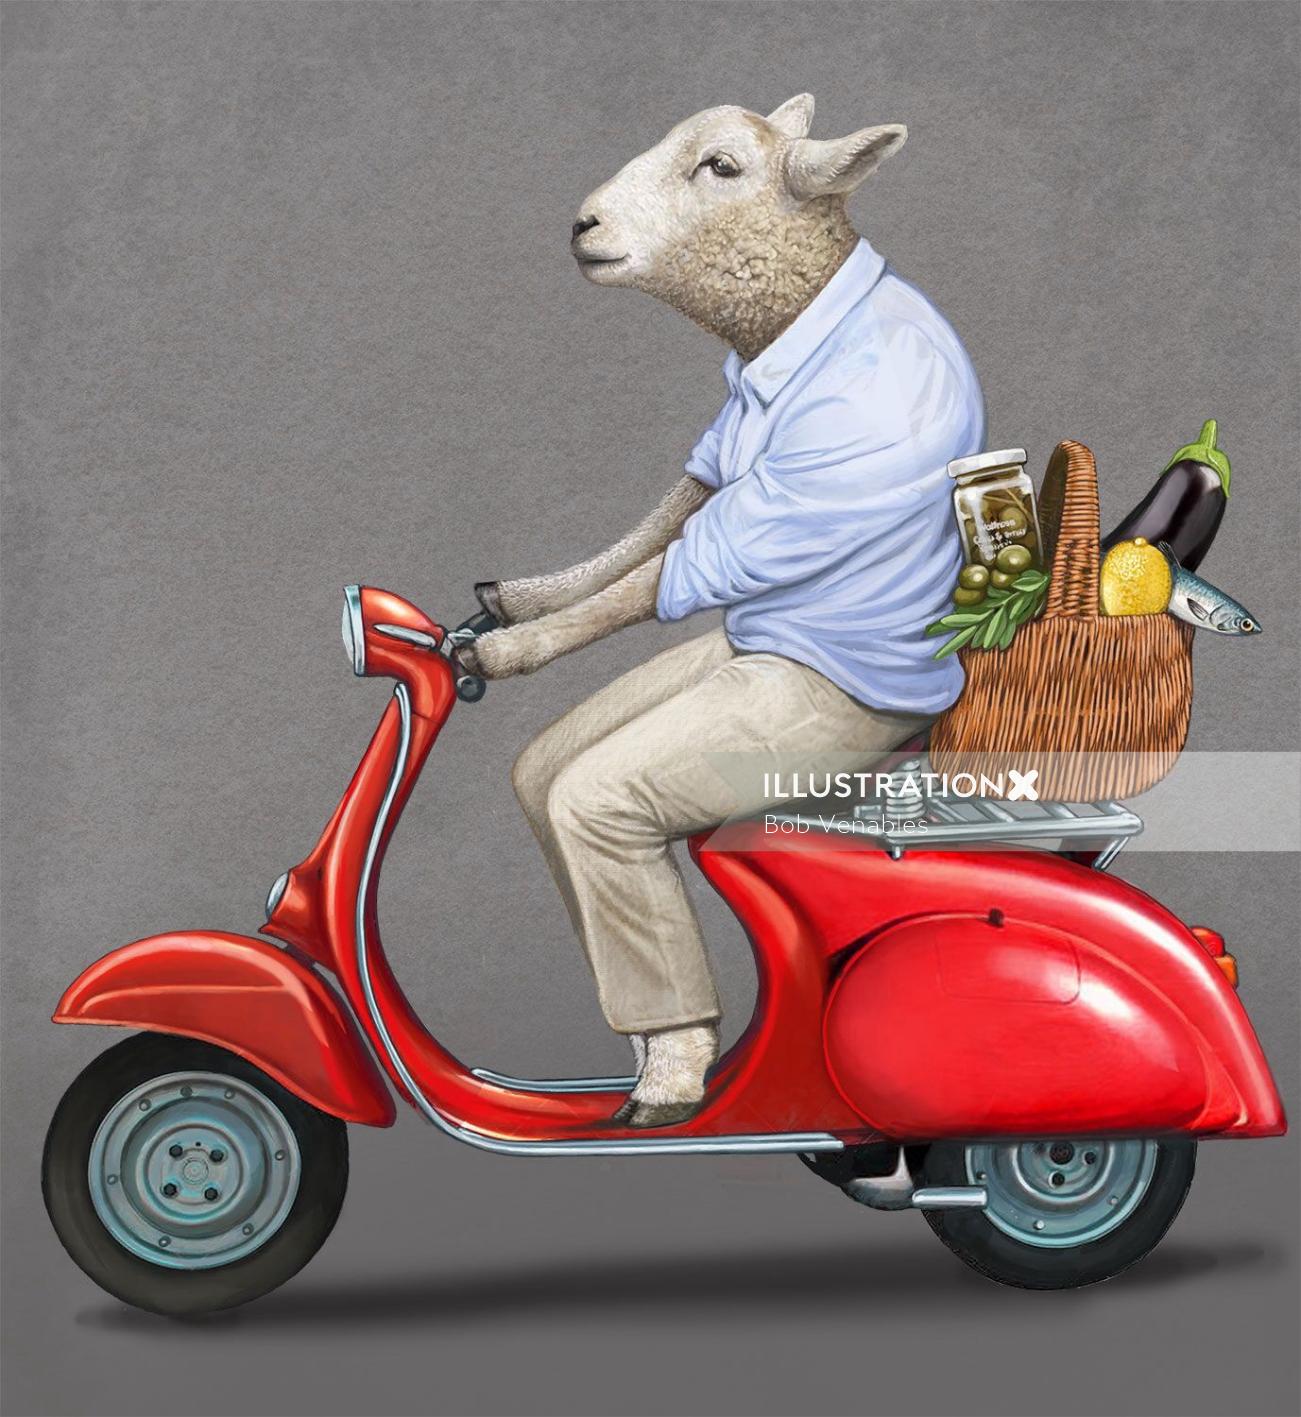 Anthropomorphic Animal Goat riding scooter 